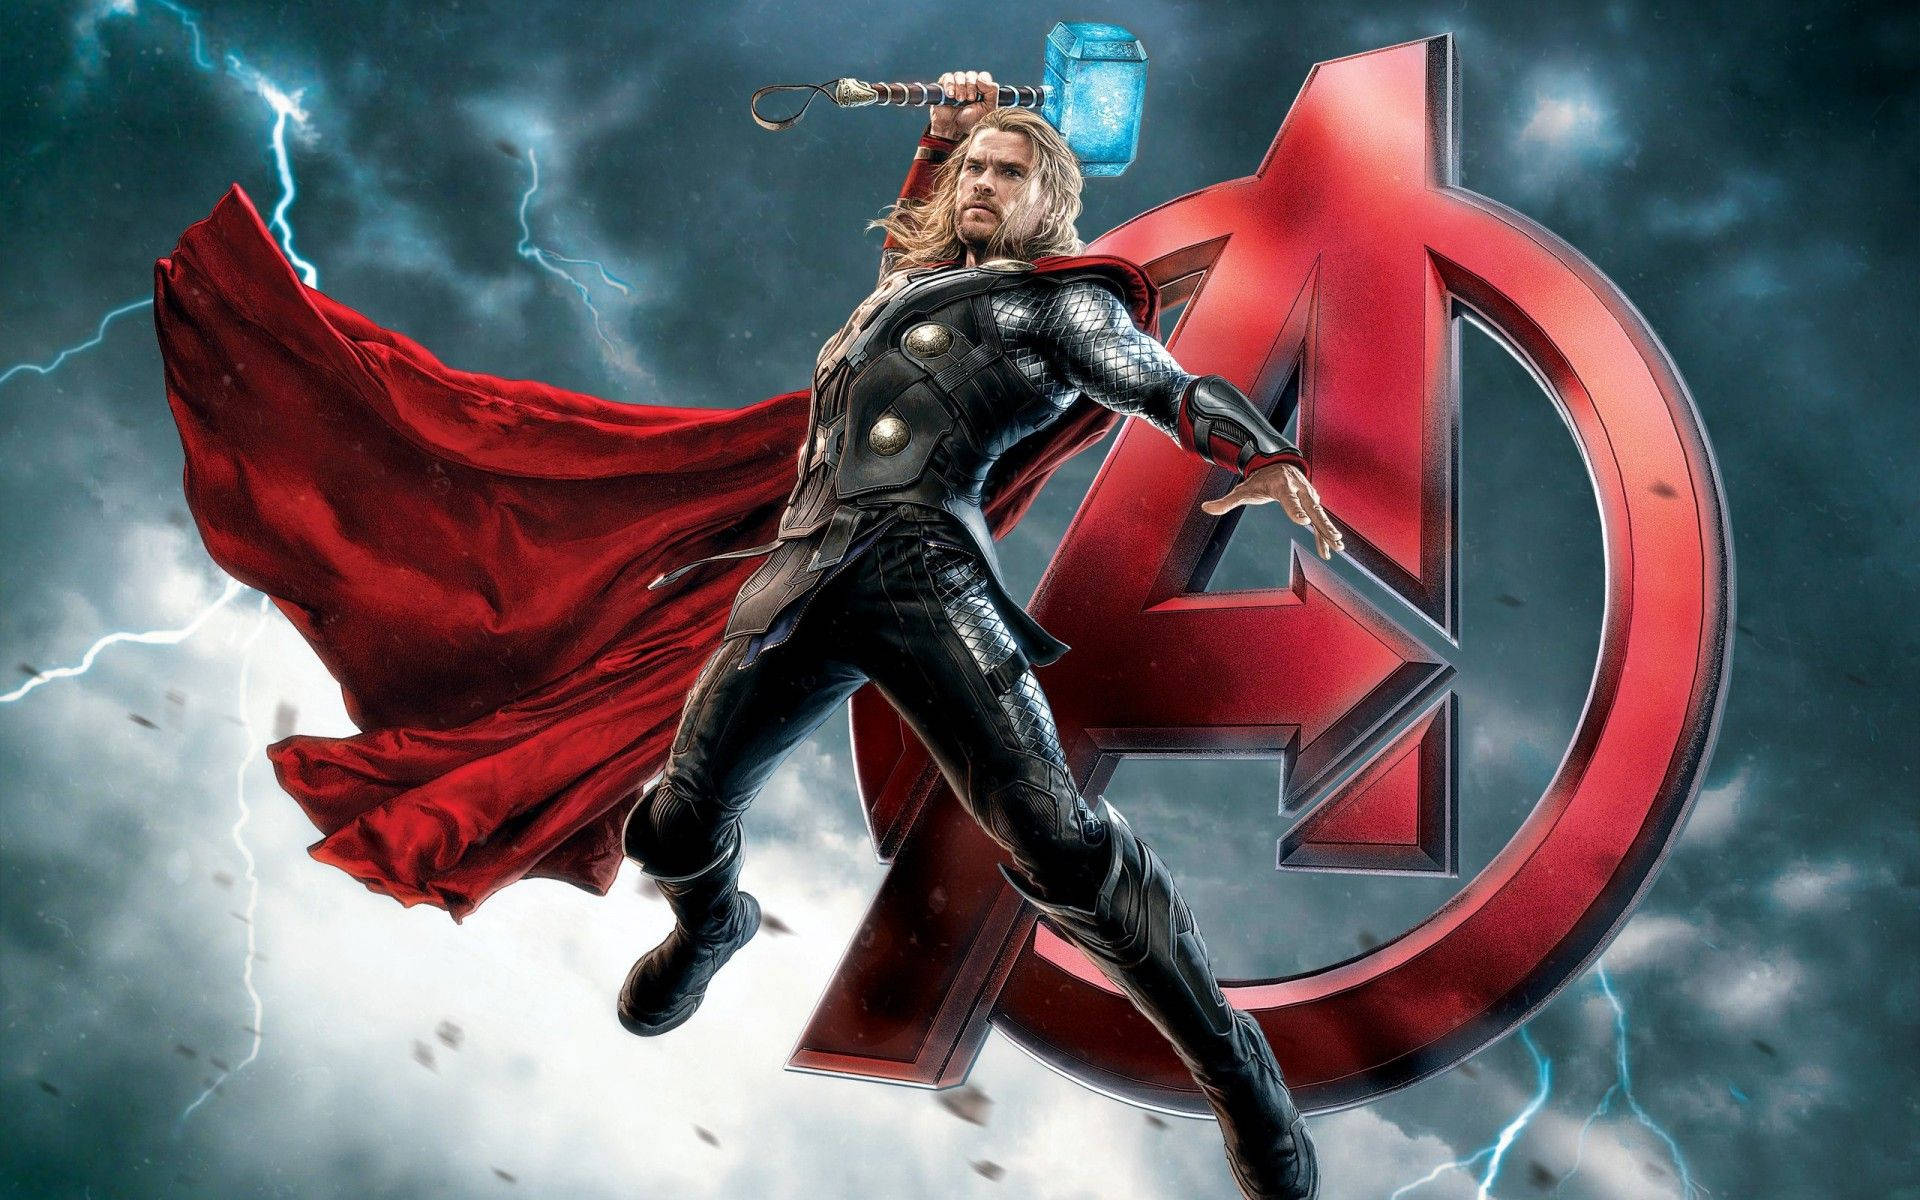 Thor, the Hammer-Wielding Marvel Superhero Wallpaper